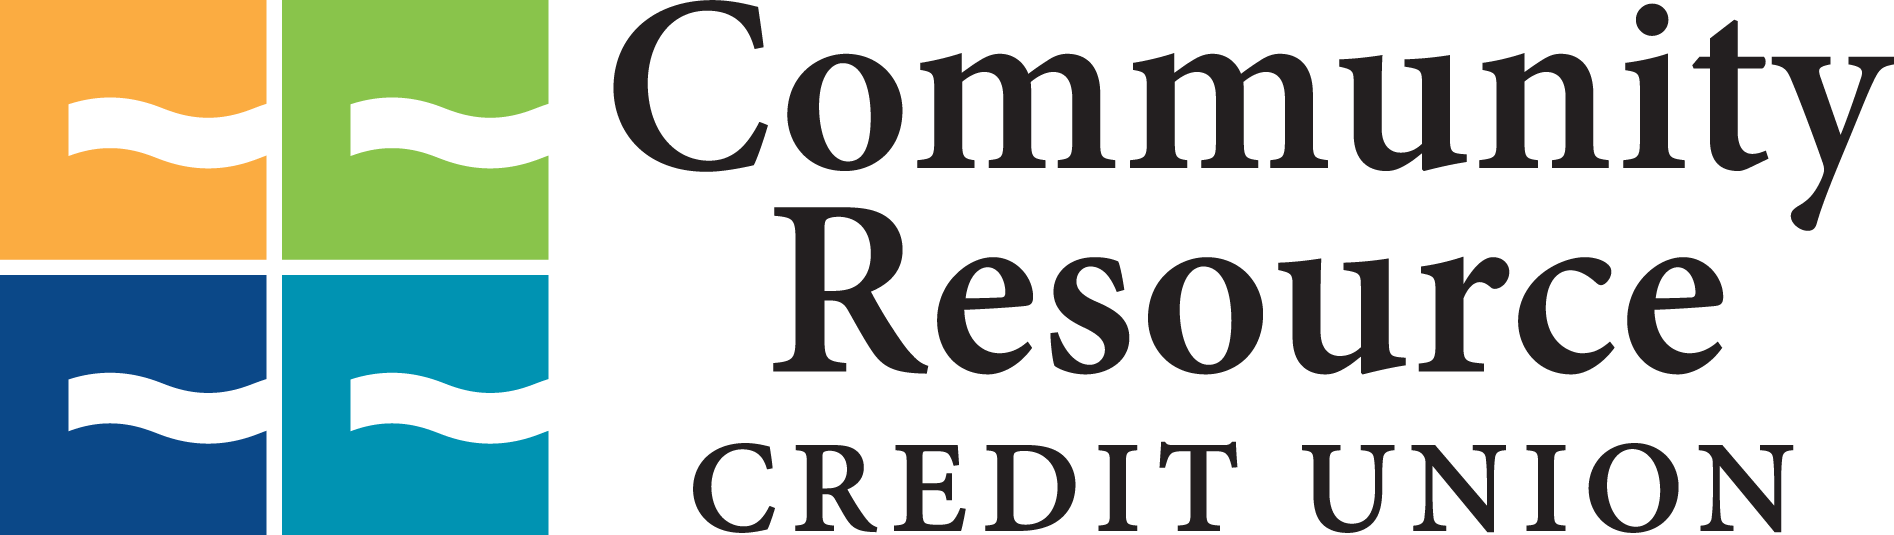 Community Resource Credit Union logo